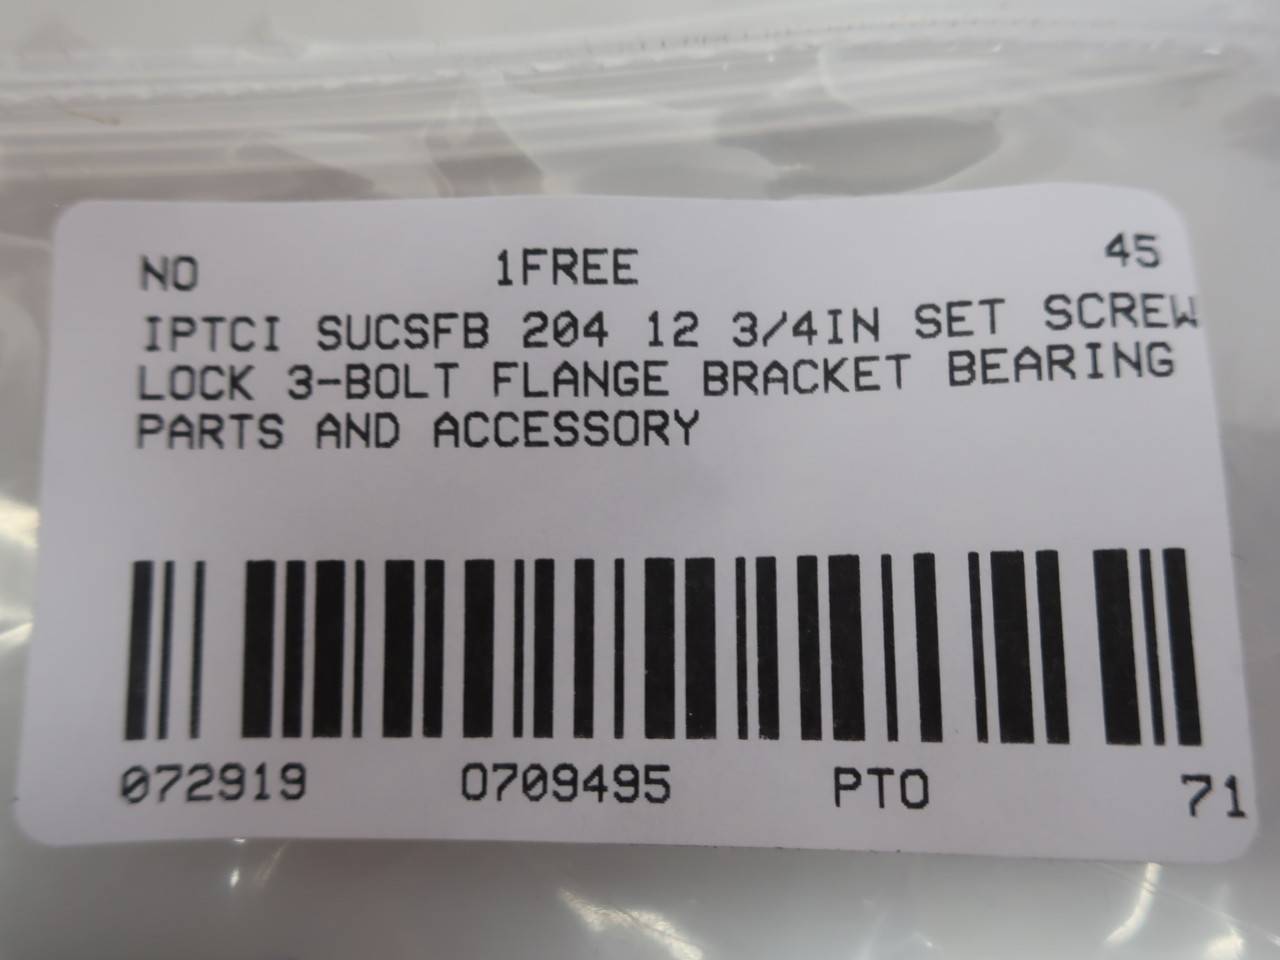 IPTCI SUCSFB 204 12 Set Screw Lock 3-Bolt Flange Bracket 3/4IN 